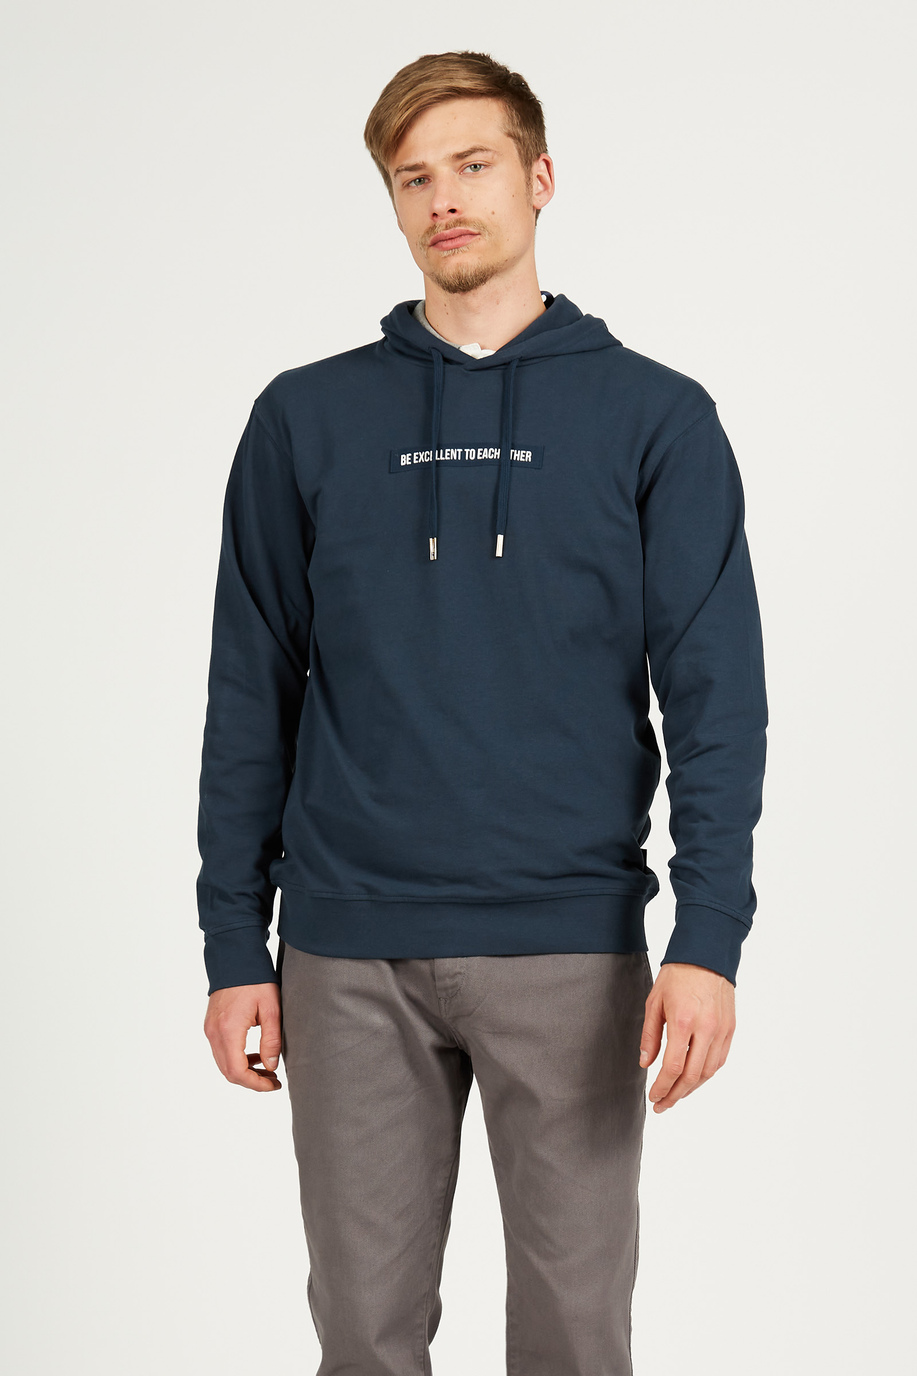 Men's oversized long-sleeved cotton sweatshirt | La Martina - Official Online Shop